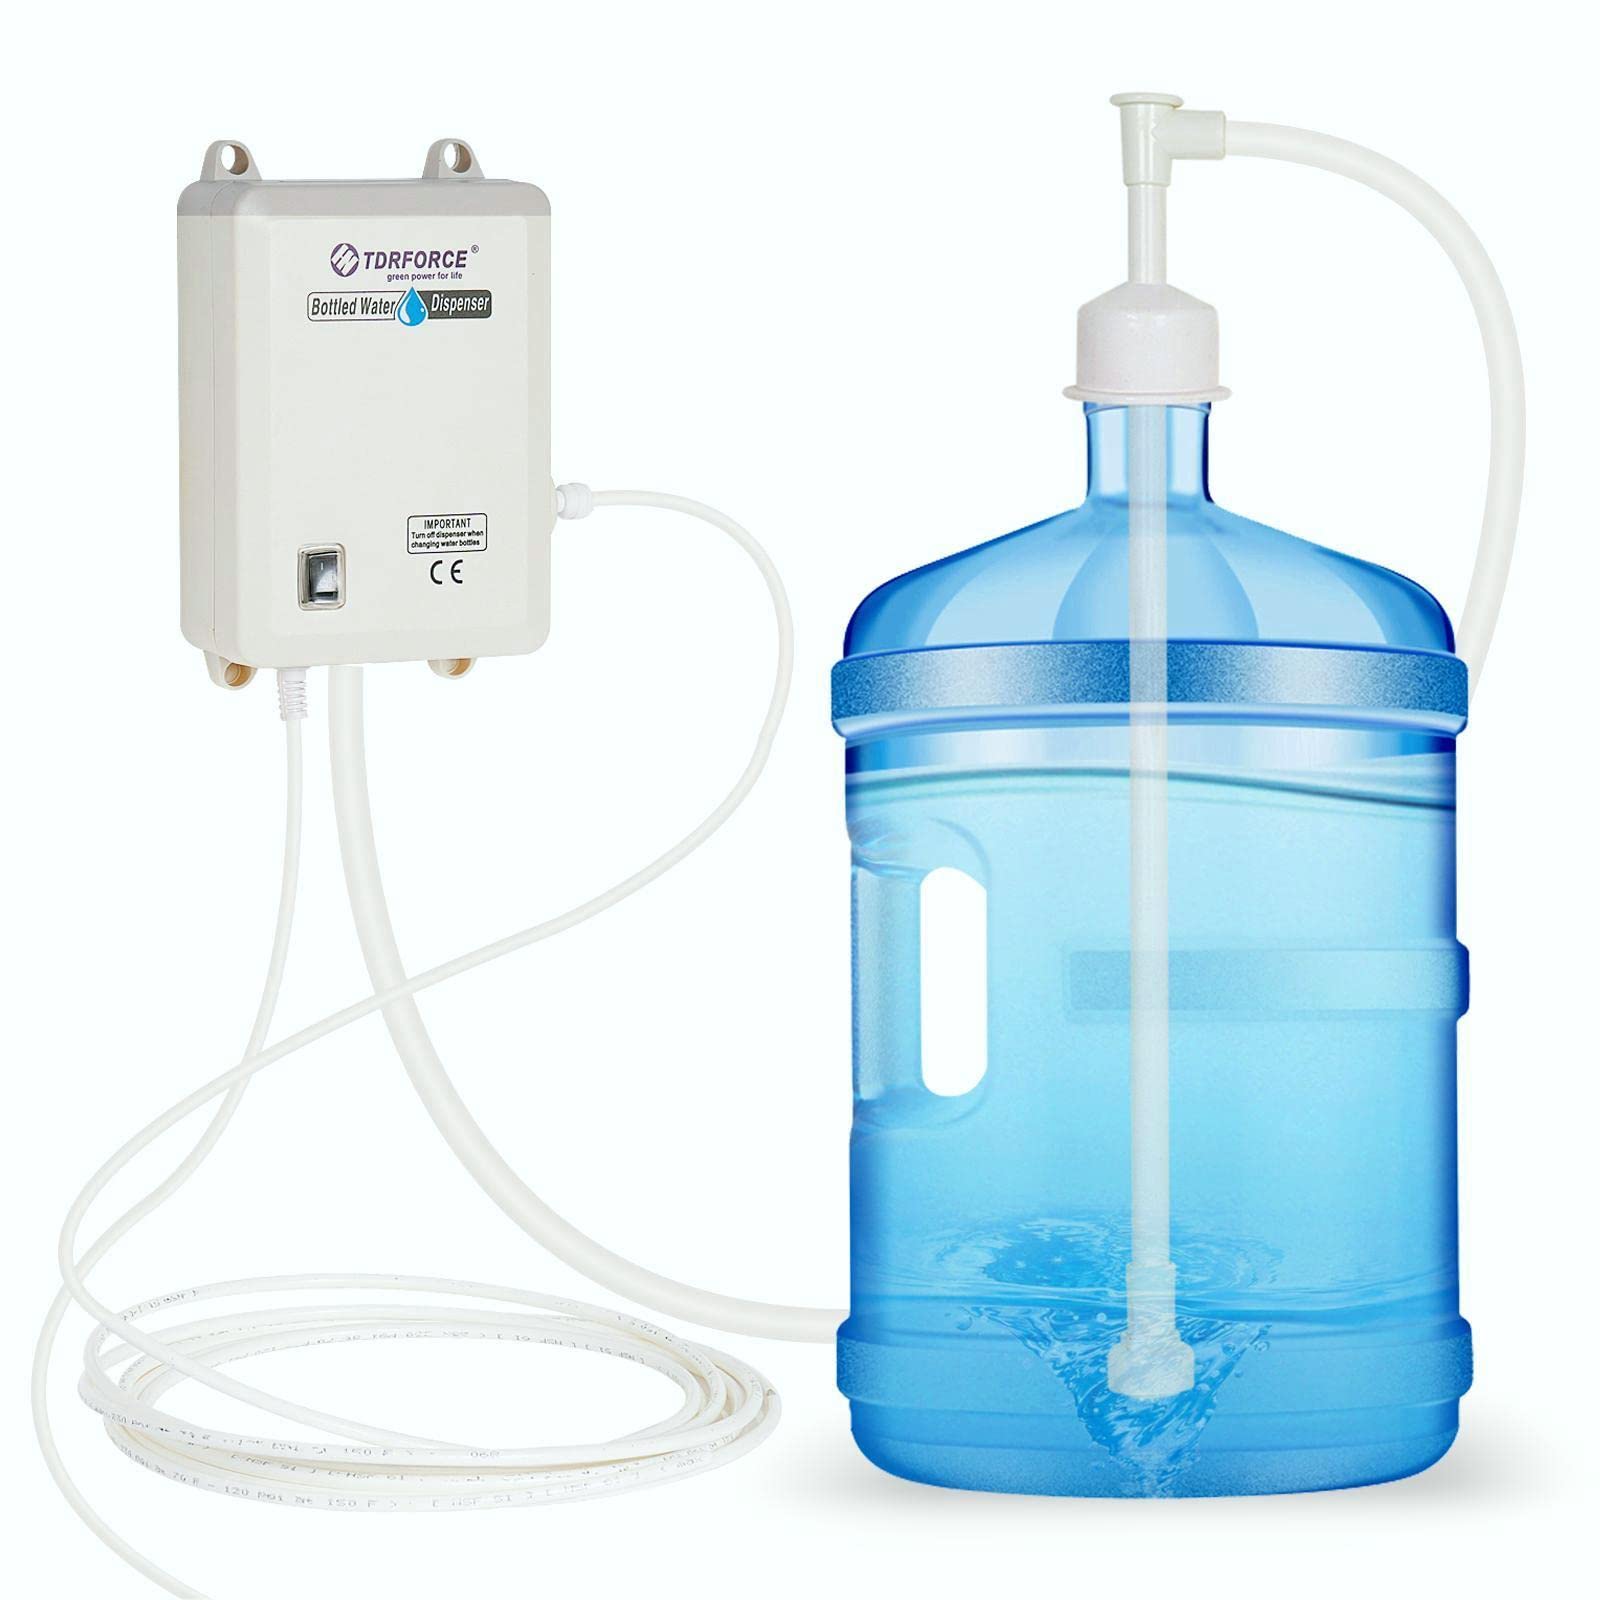 5 Gallon & 3 Gallon Water Jugs - BPA FREE Food Grade Plastic Water